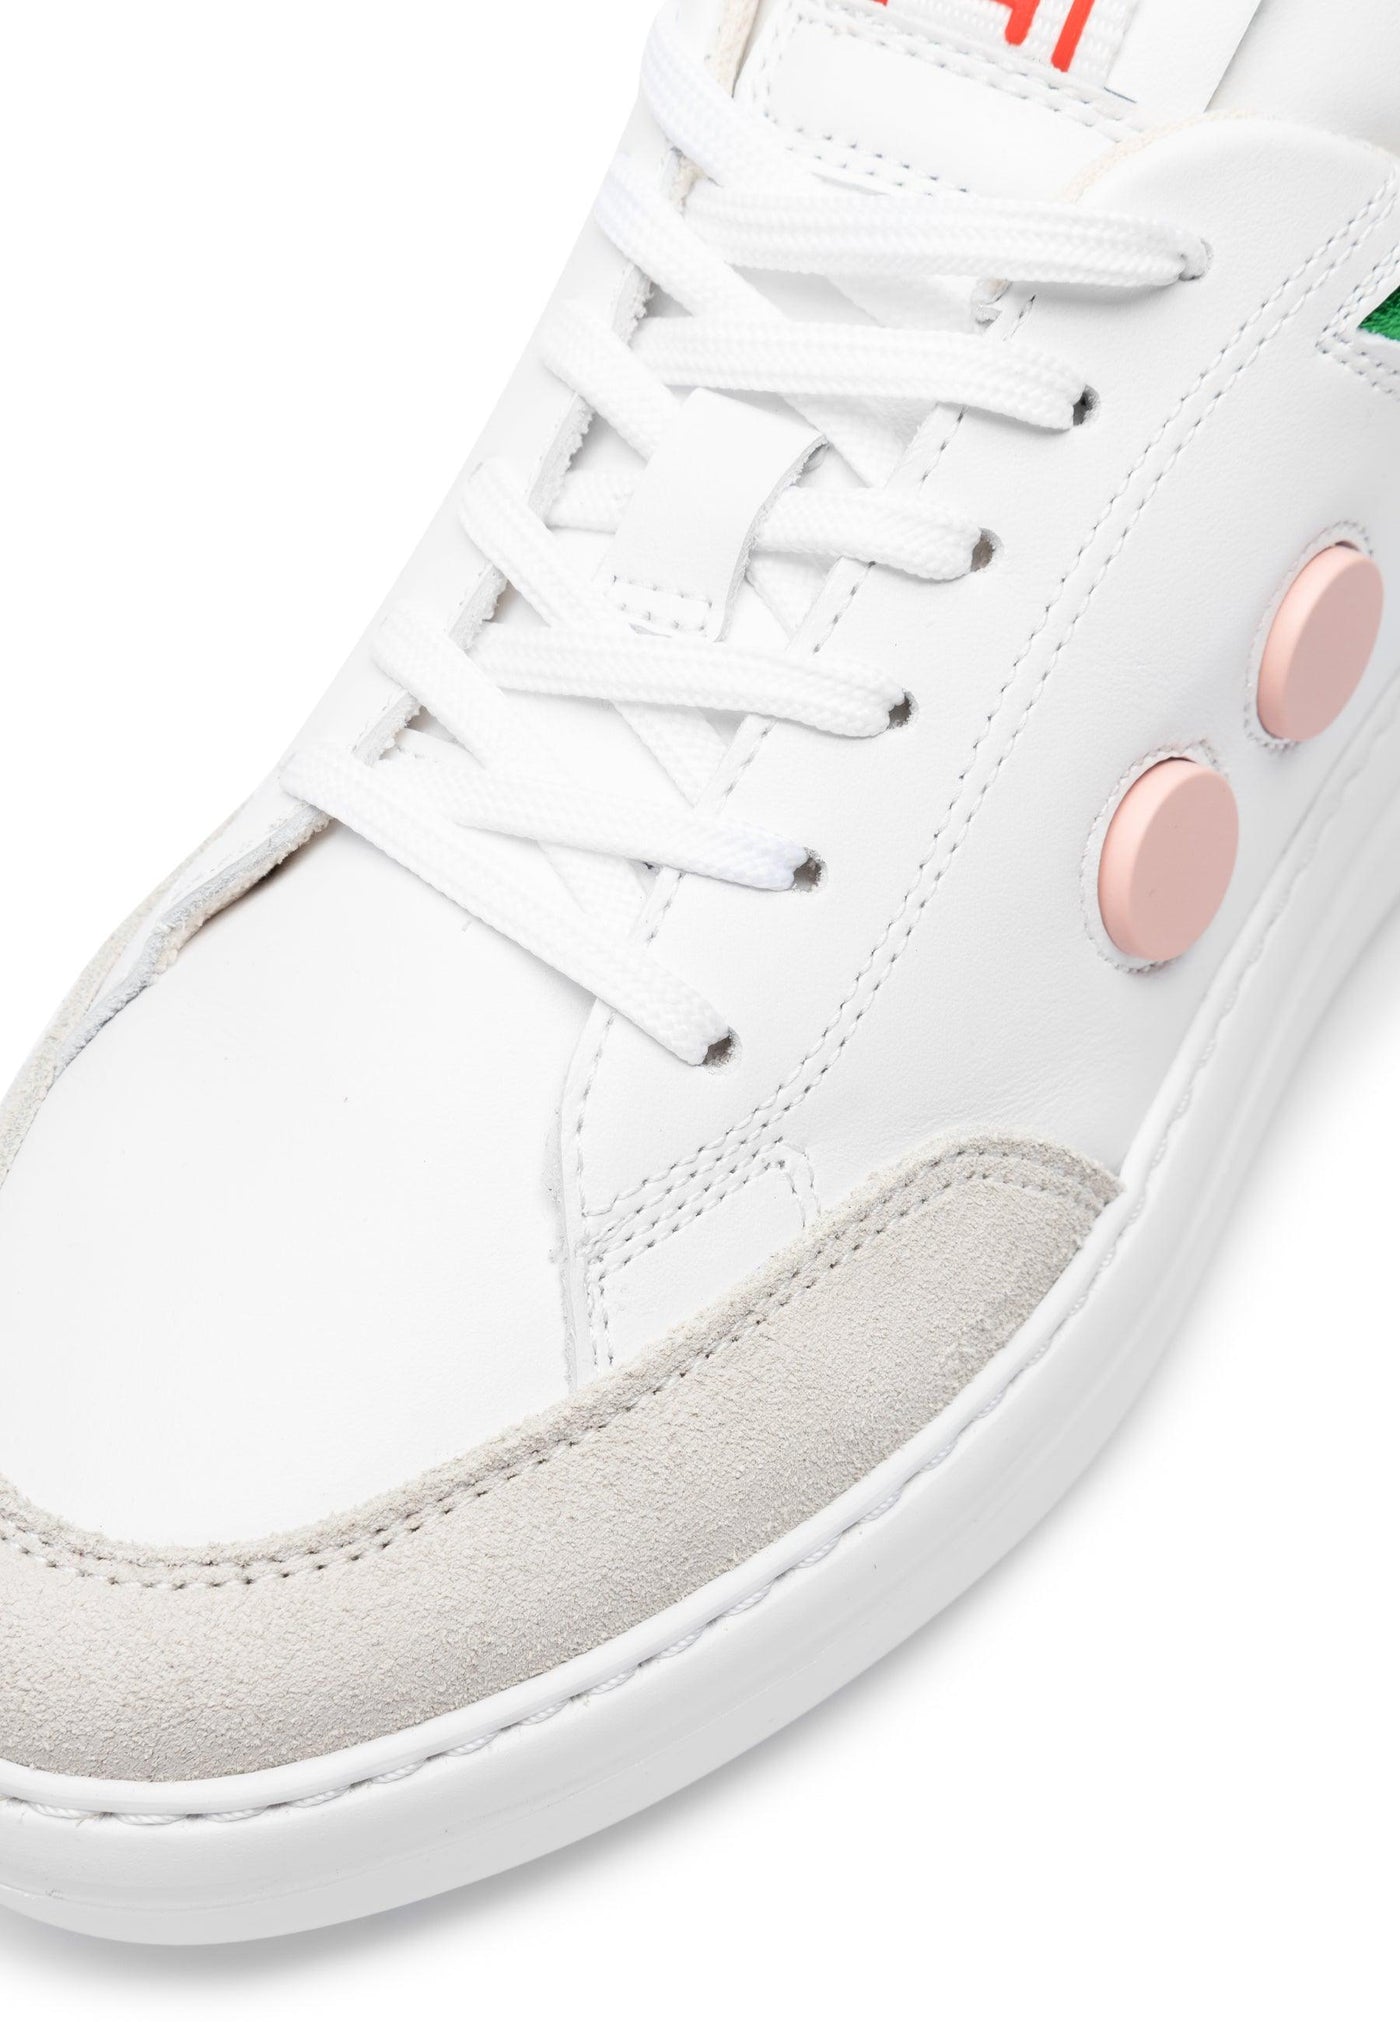 LÄST Minimalist Low - Leather - White/Green Metallic Low Sneakers White/Green